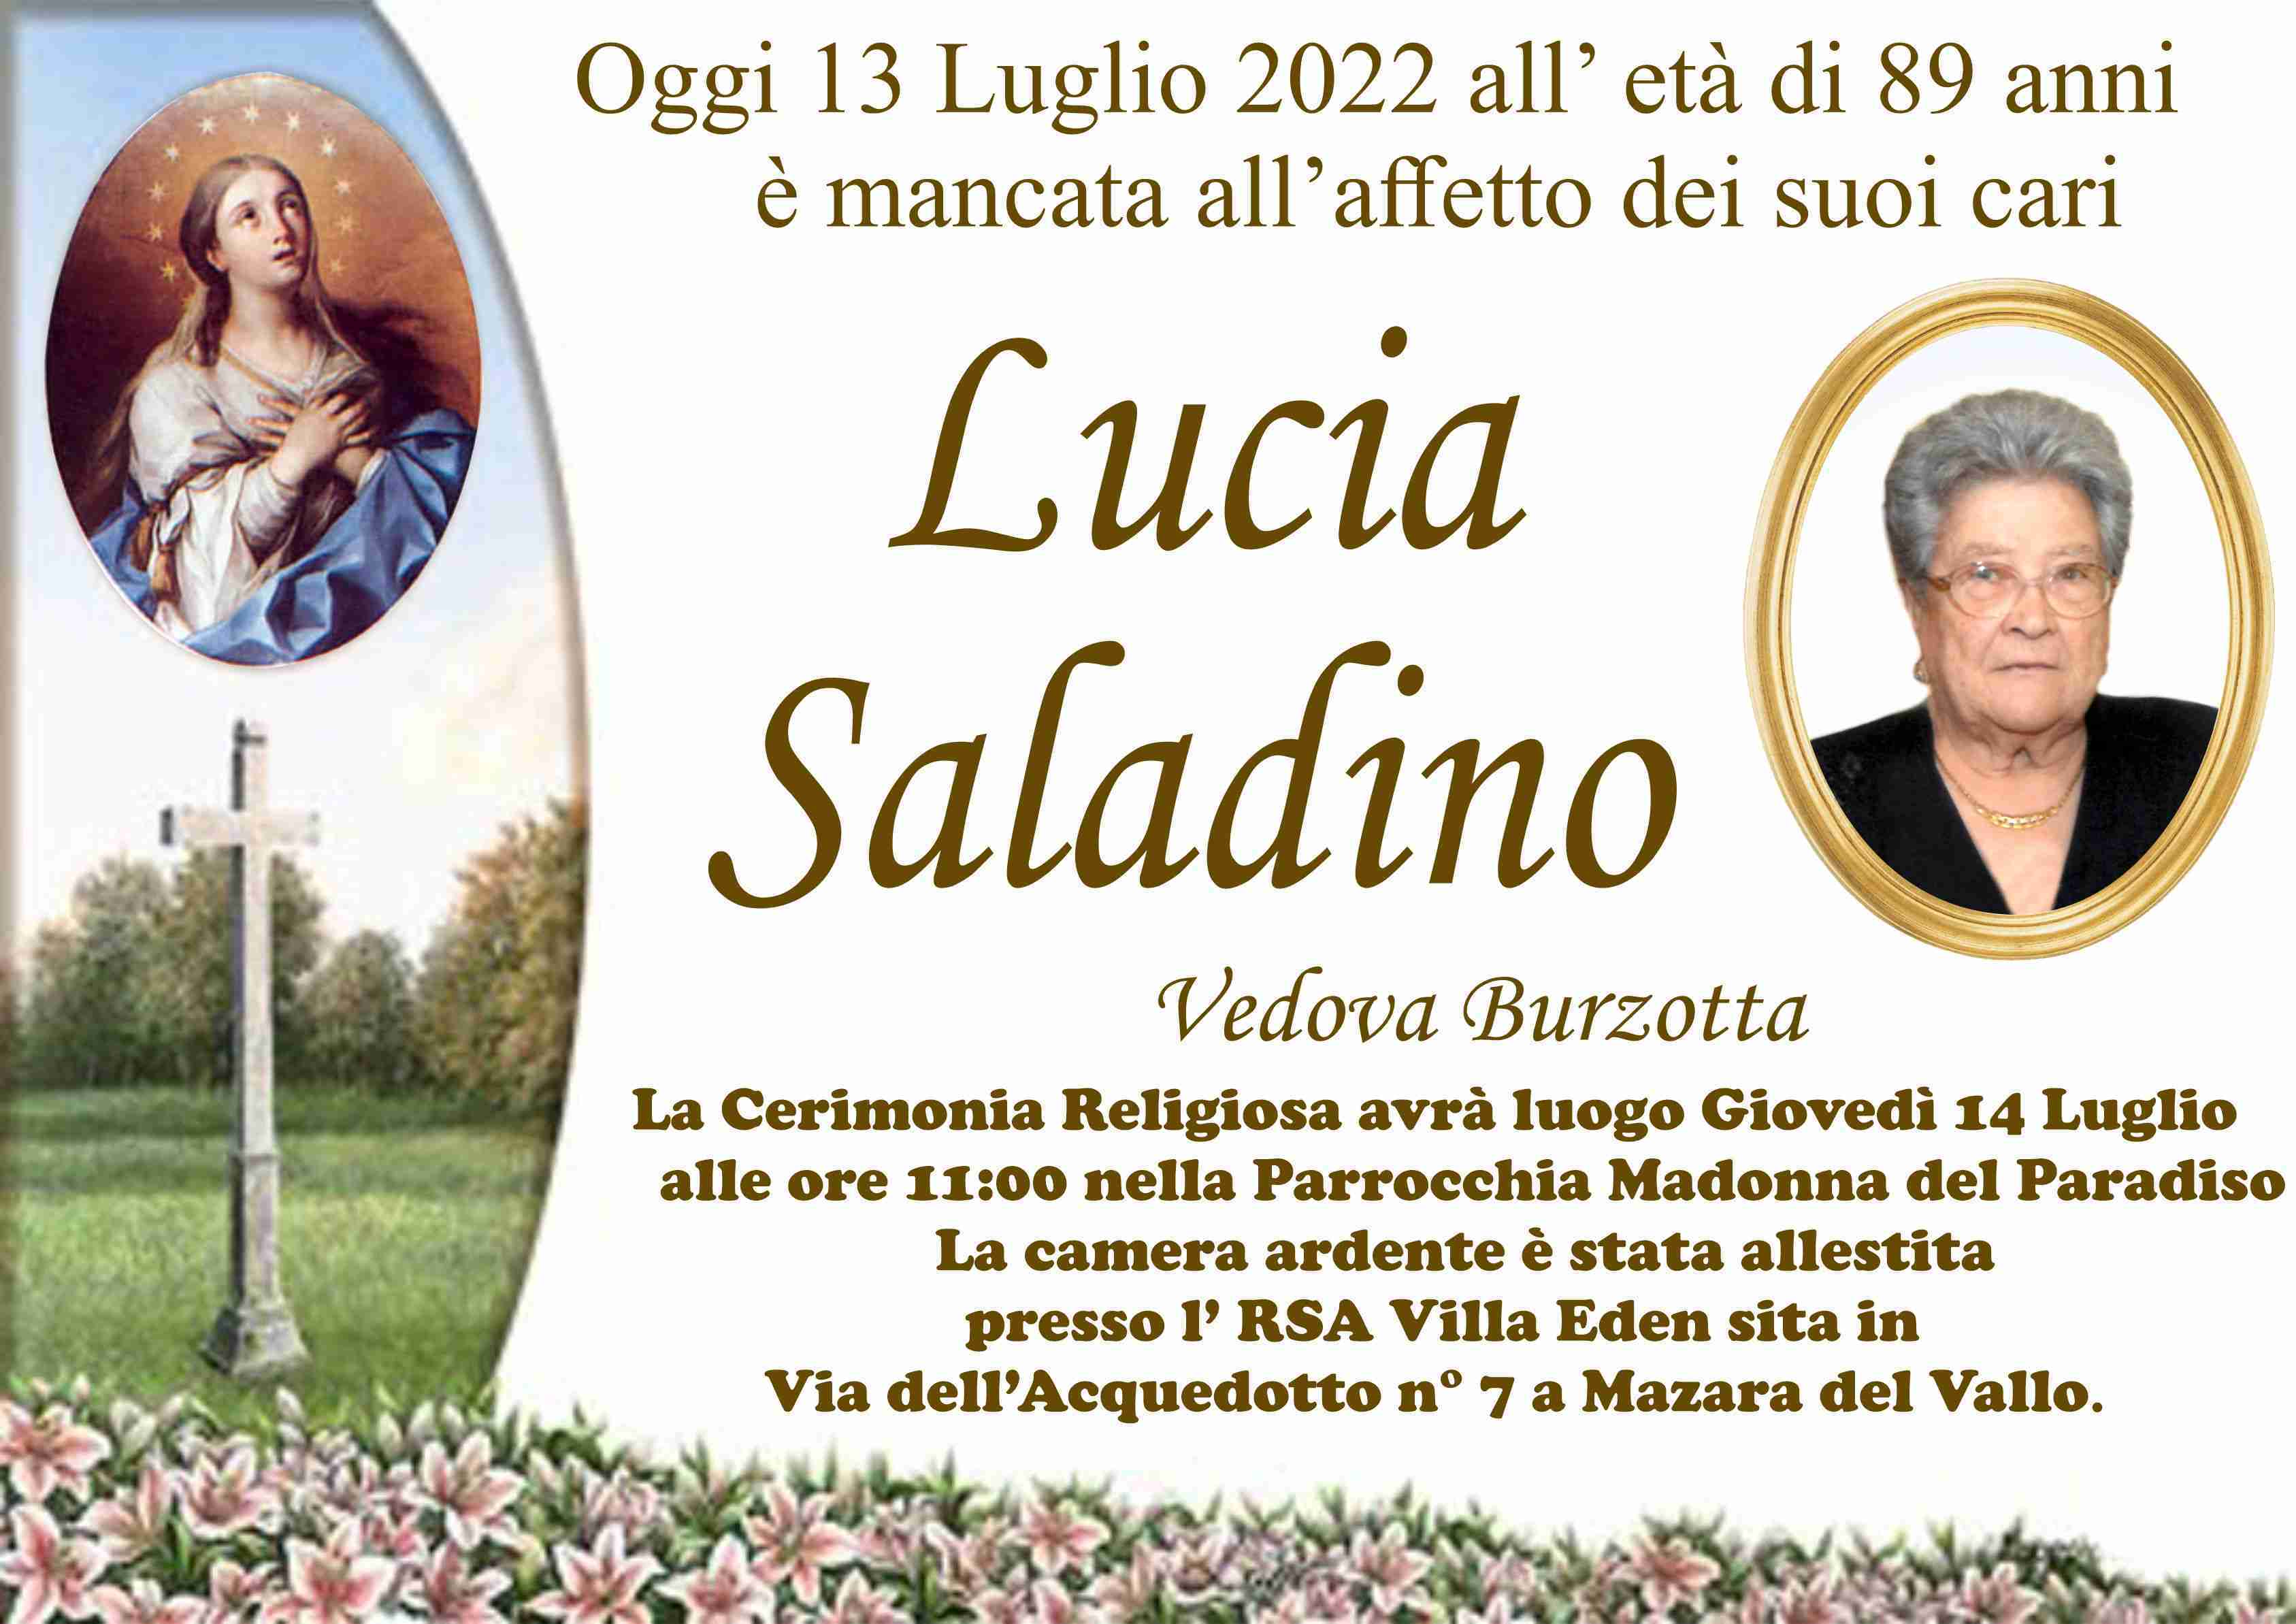 Lucia Saladino